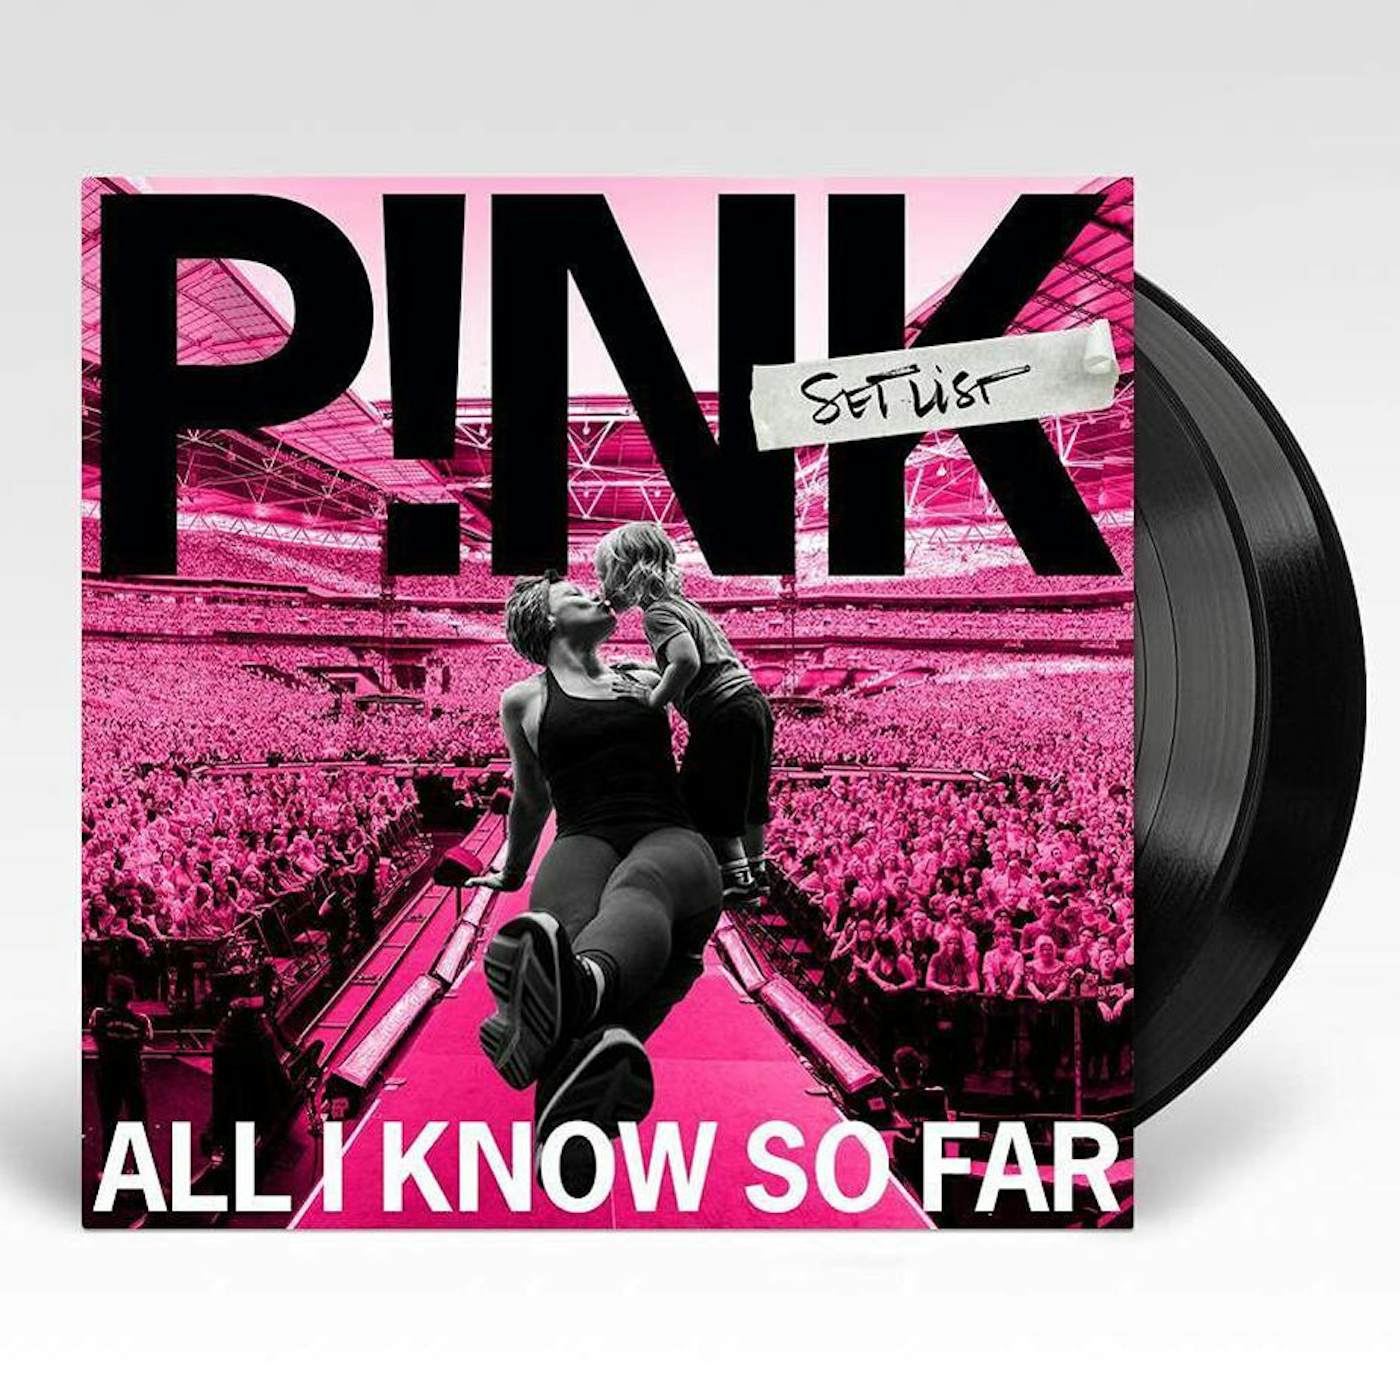 P!nk All I Know So Far: Setlist Vinyl Record